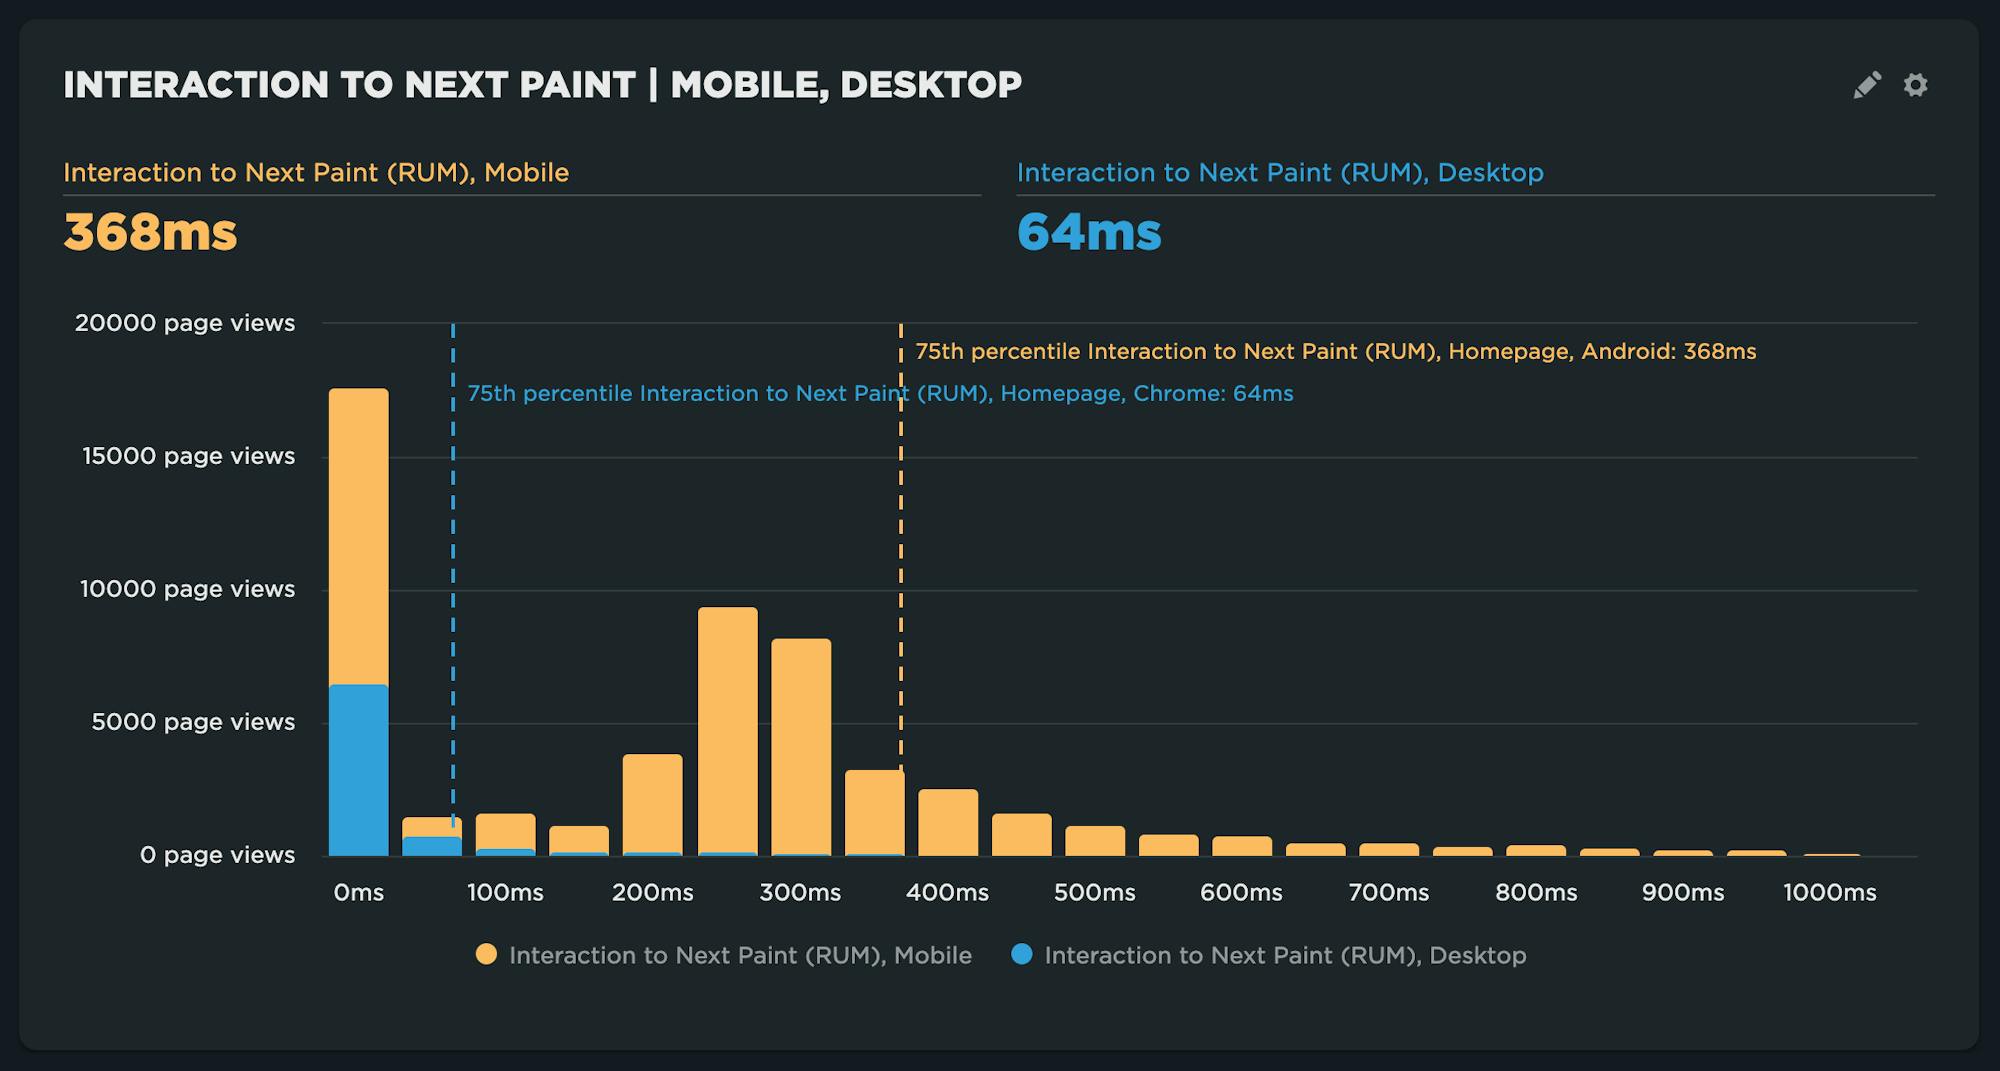 INP histogram comparison between mobile and desktop